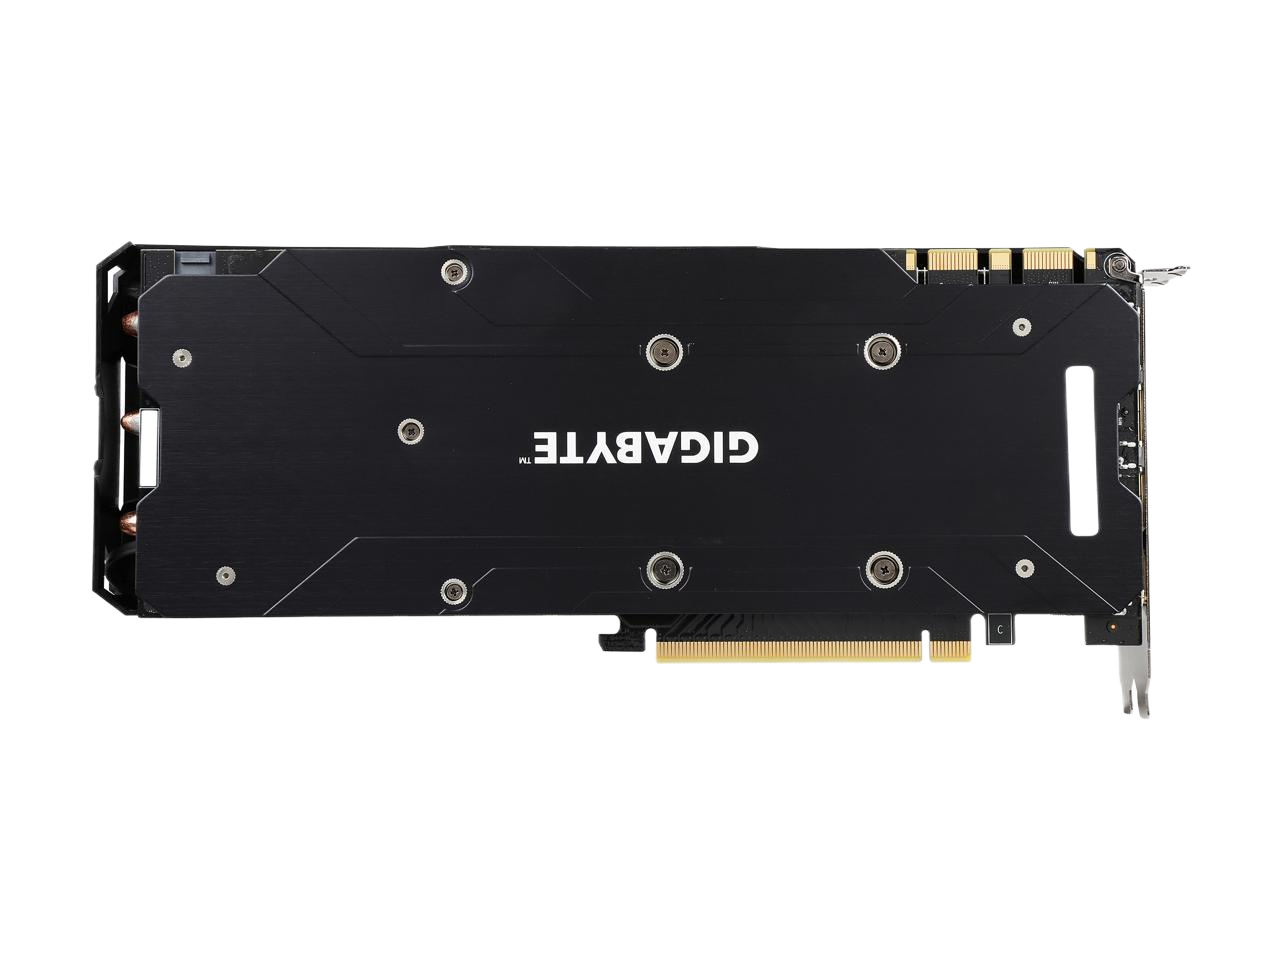 GIGABYTE GeForce GTX 1080 8GB GDDR5X PCI Express 3.0 x16 SLI Support ATX Video Card GV-N1080WF3OC-8GD